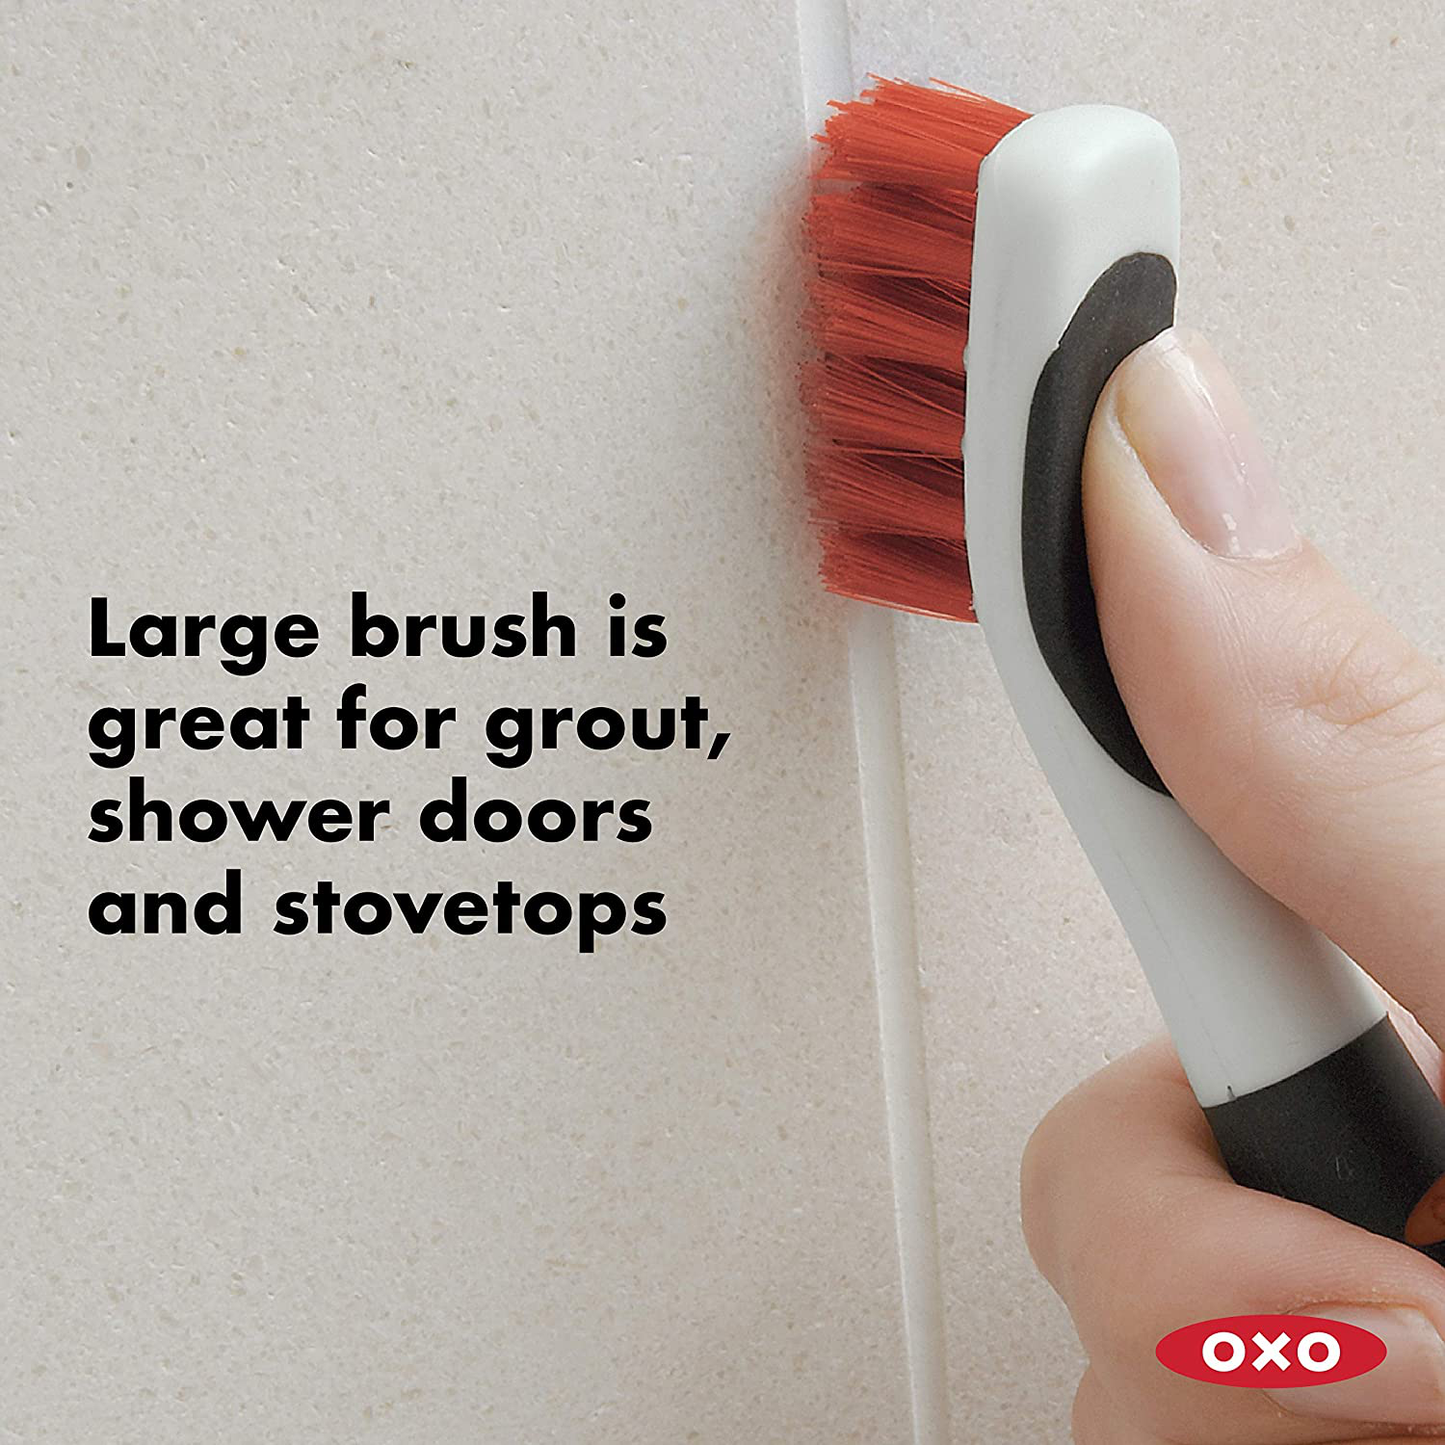 OXO Good Grips Deep Clean Brush Set Animals & Pet Supplies > Pet Supplies > Fish Supplies > Aquarium Cleaning Supplies OXO   